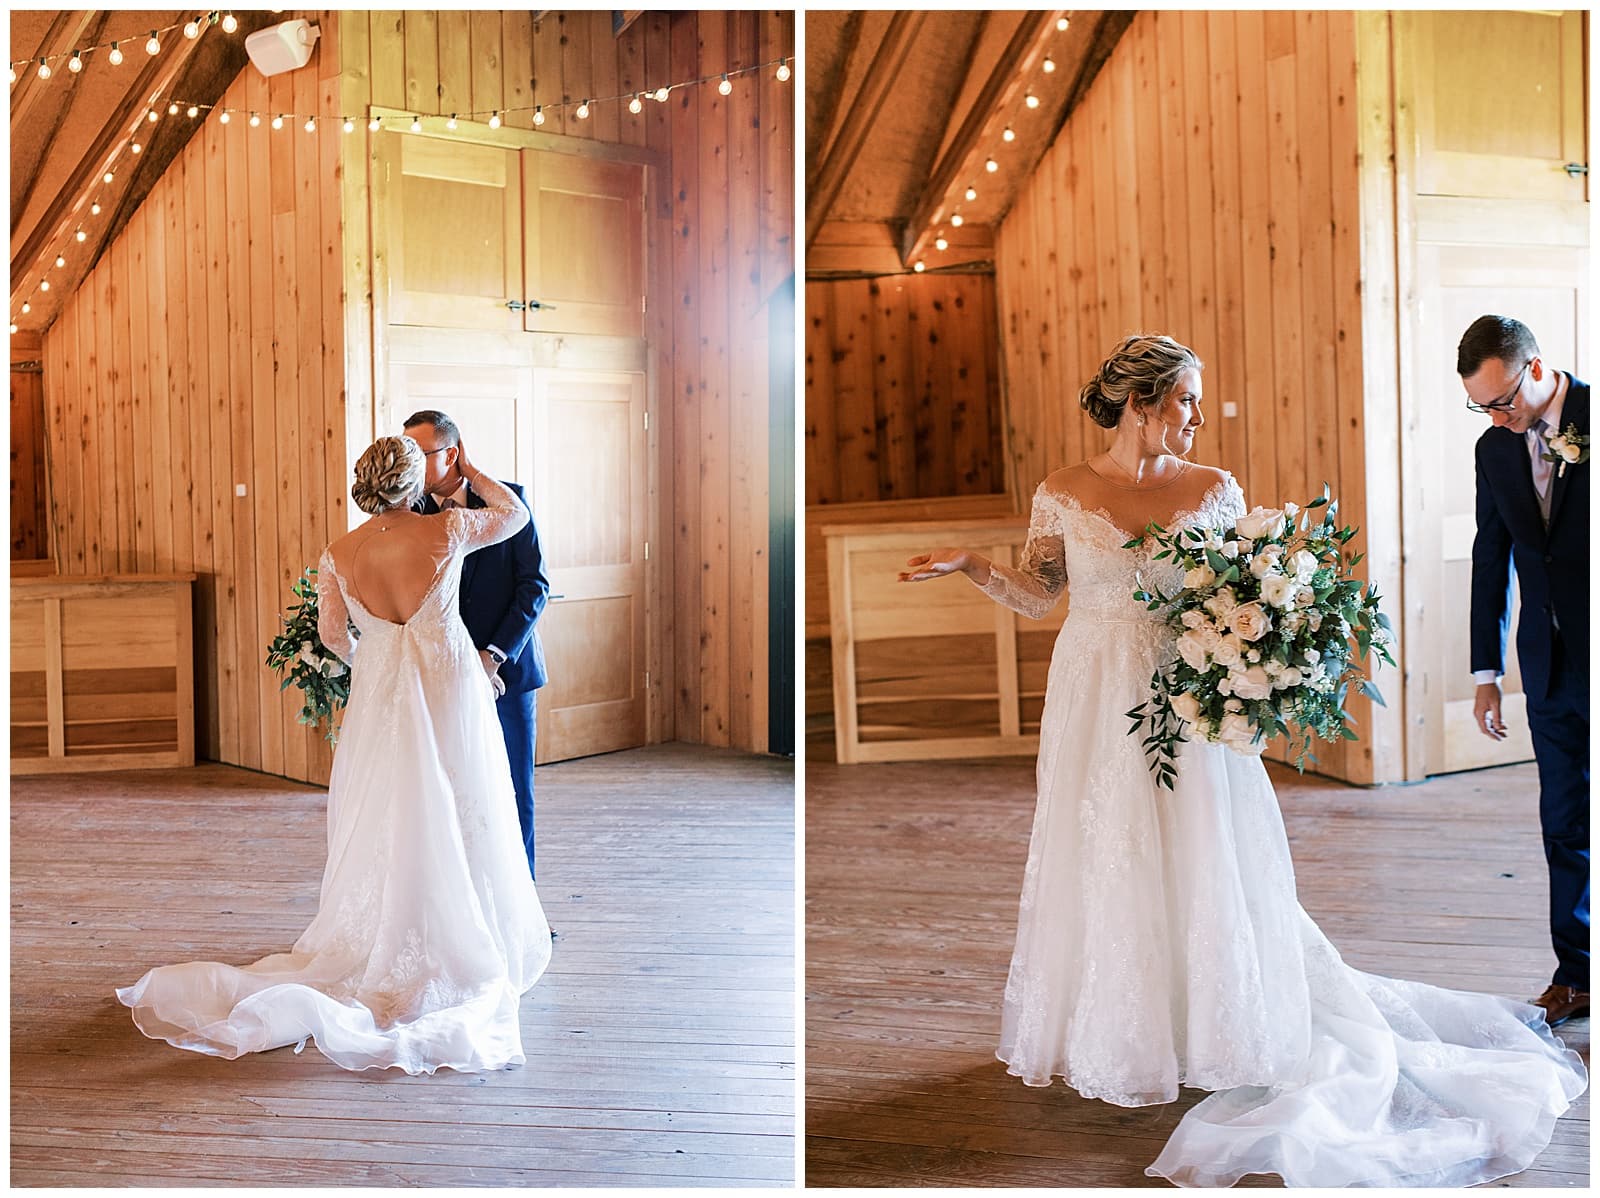 Danielle-Defayette-Photography-Castle-Hill-Cider-Charlottesville-Wedding-2020_0019.jpg